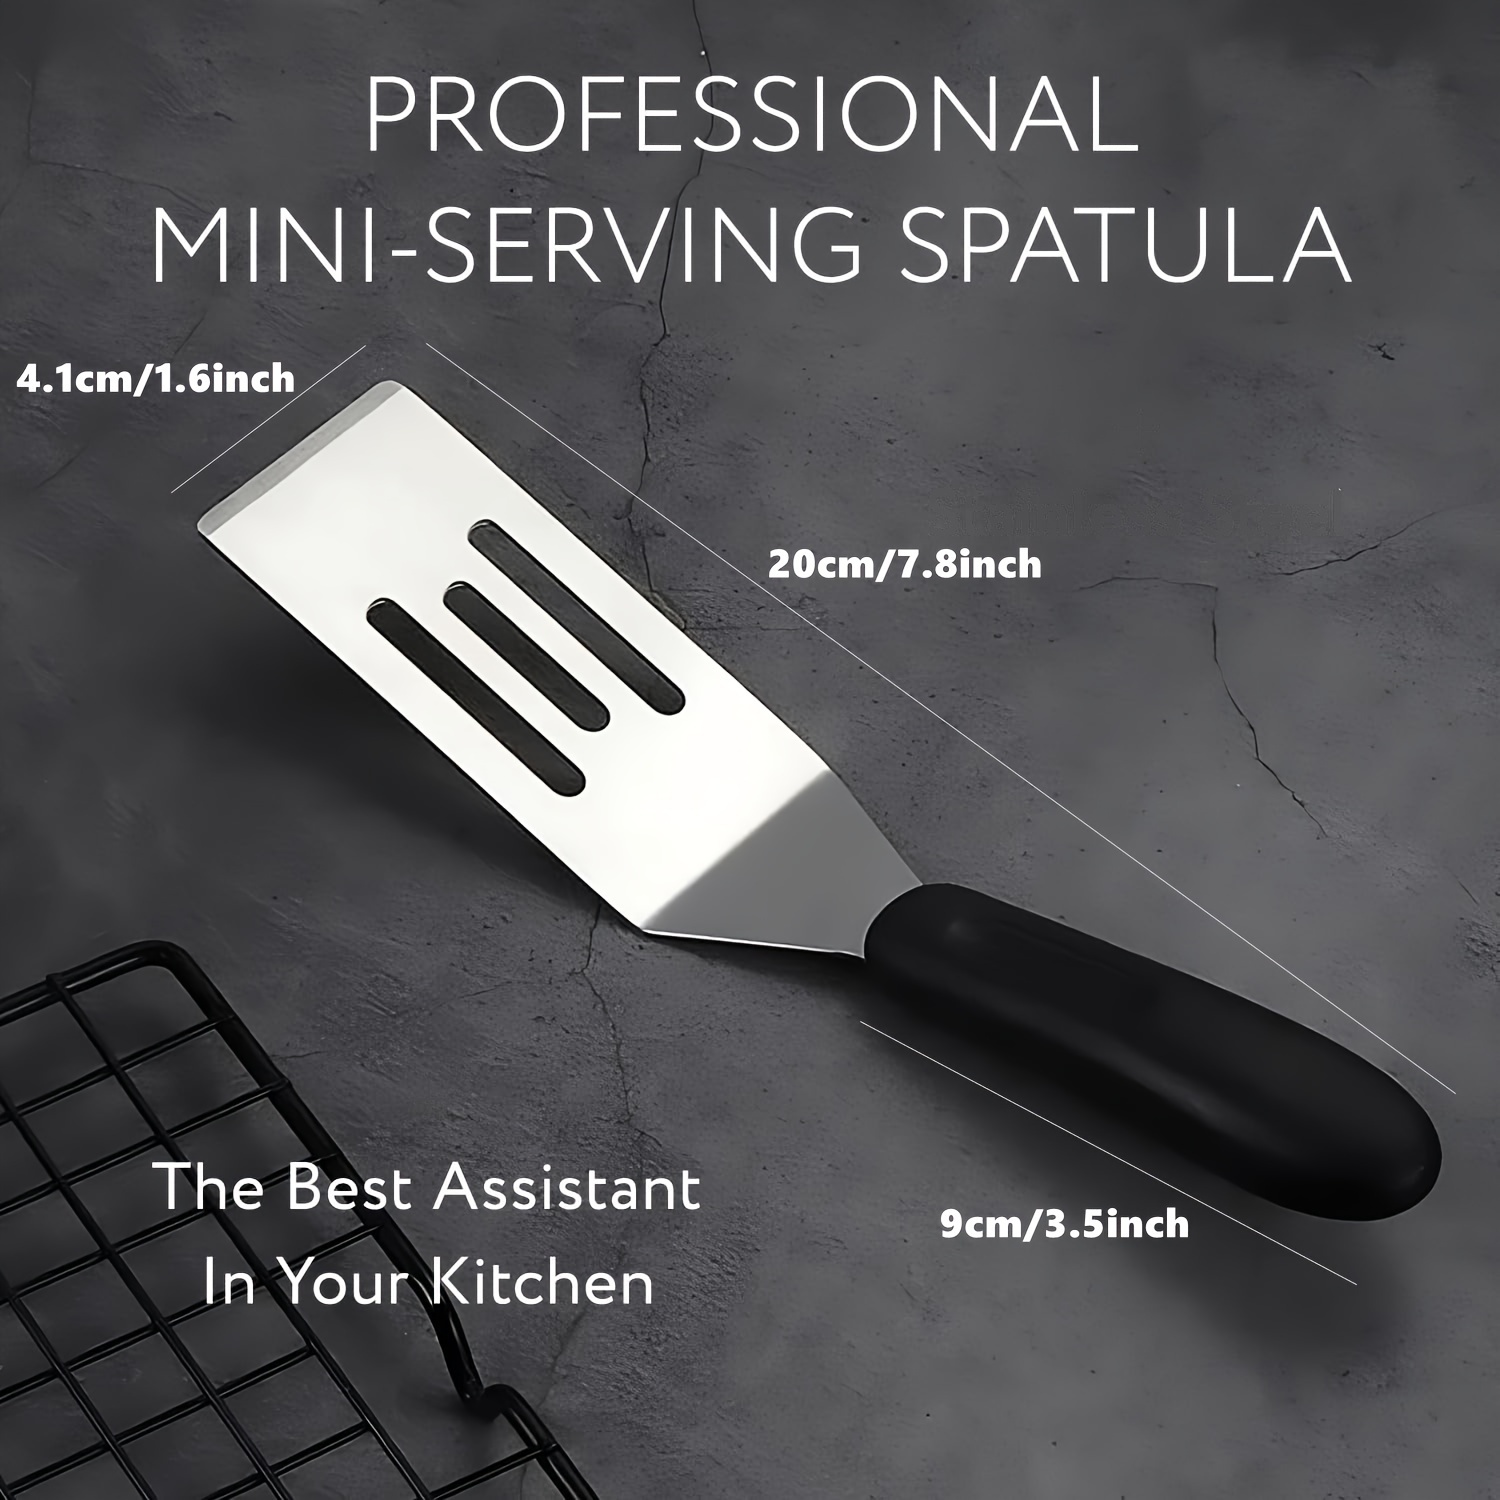 Mini Serving Spatula